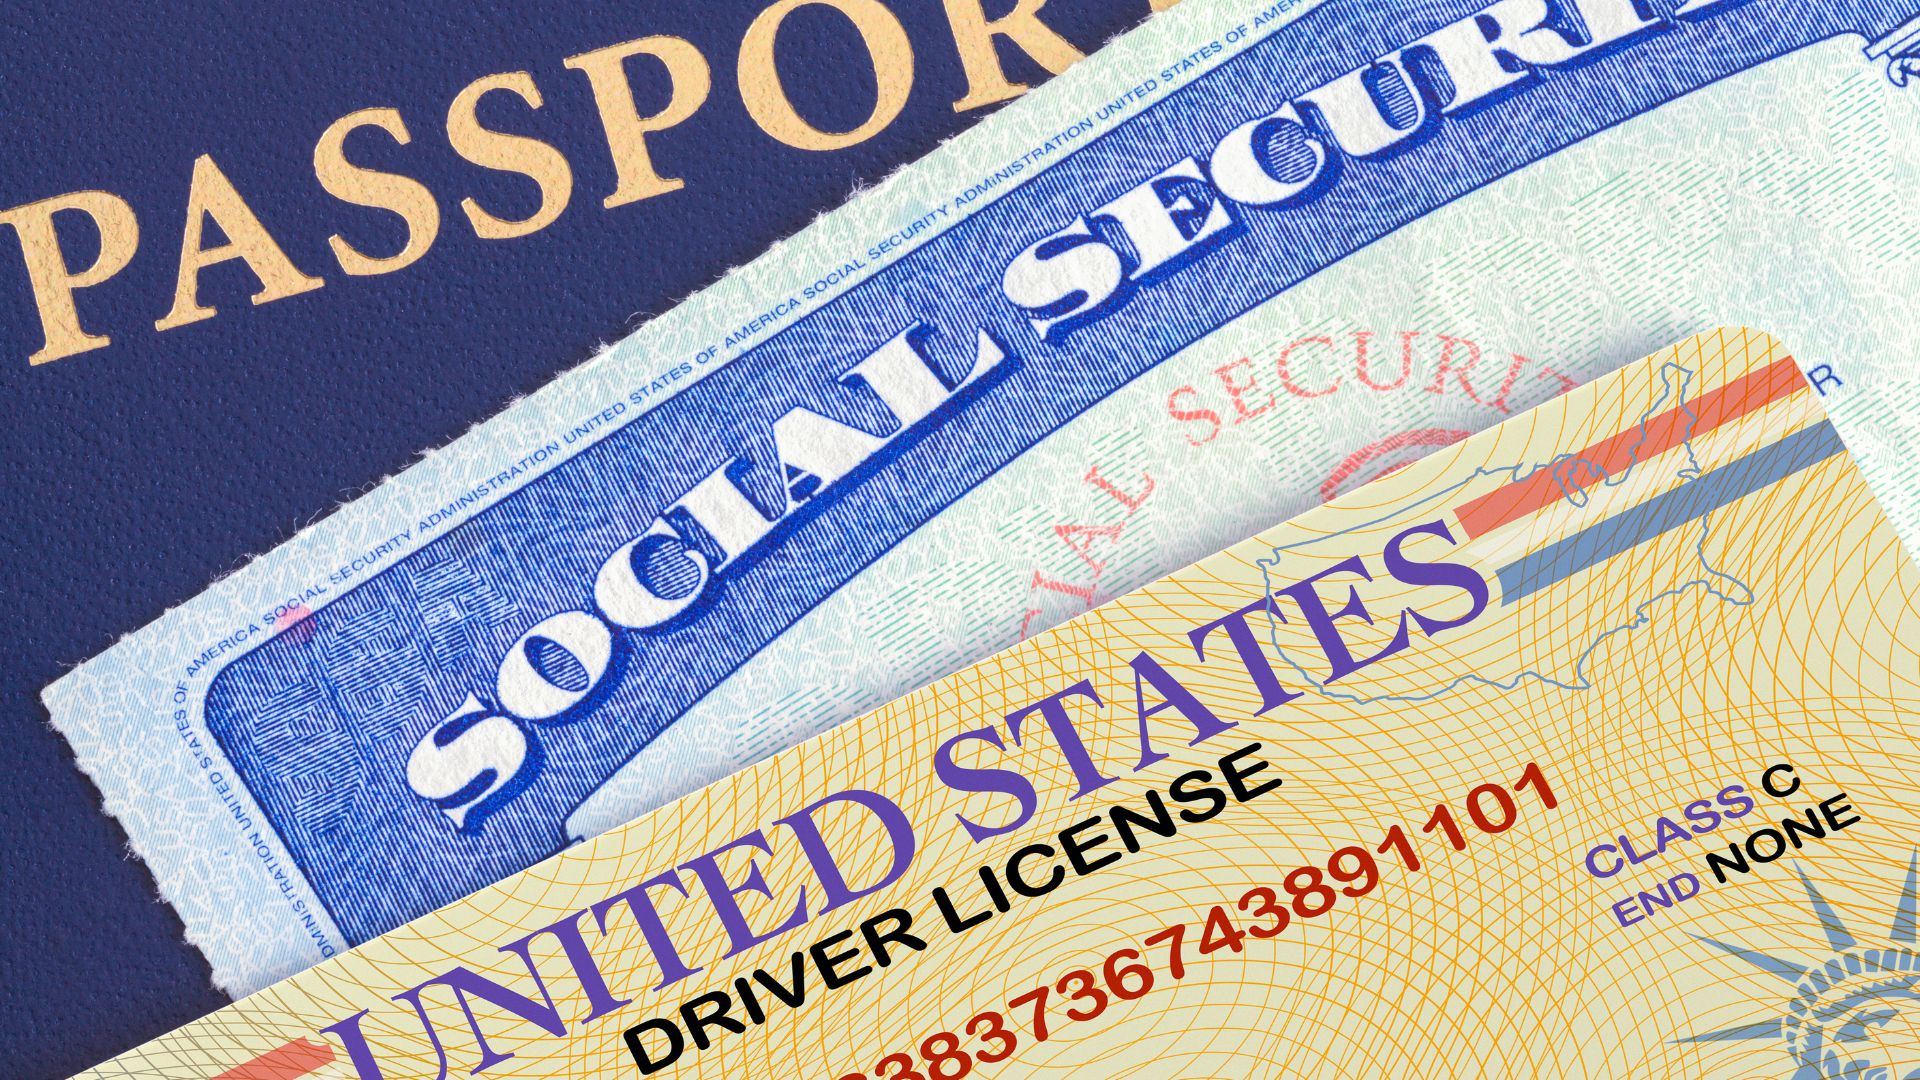 Varios documentos de USA: pasaporte, social security card y permiso de conducción